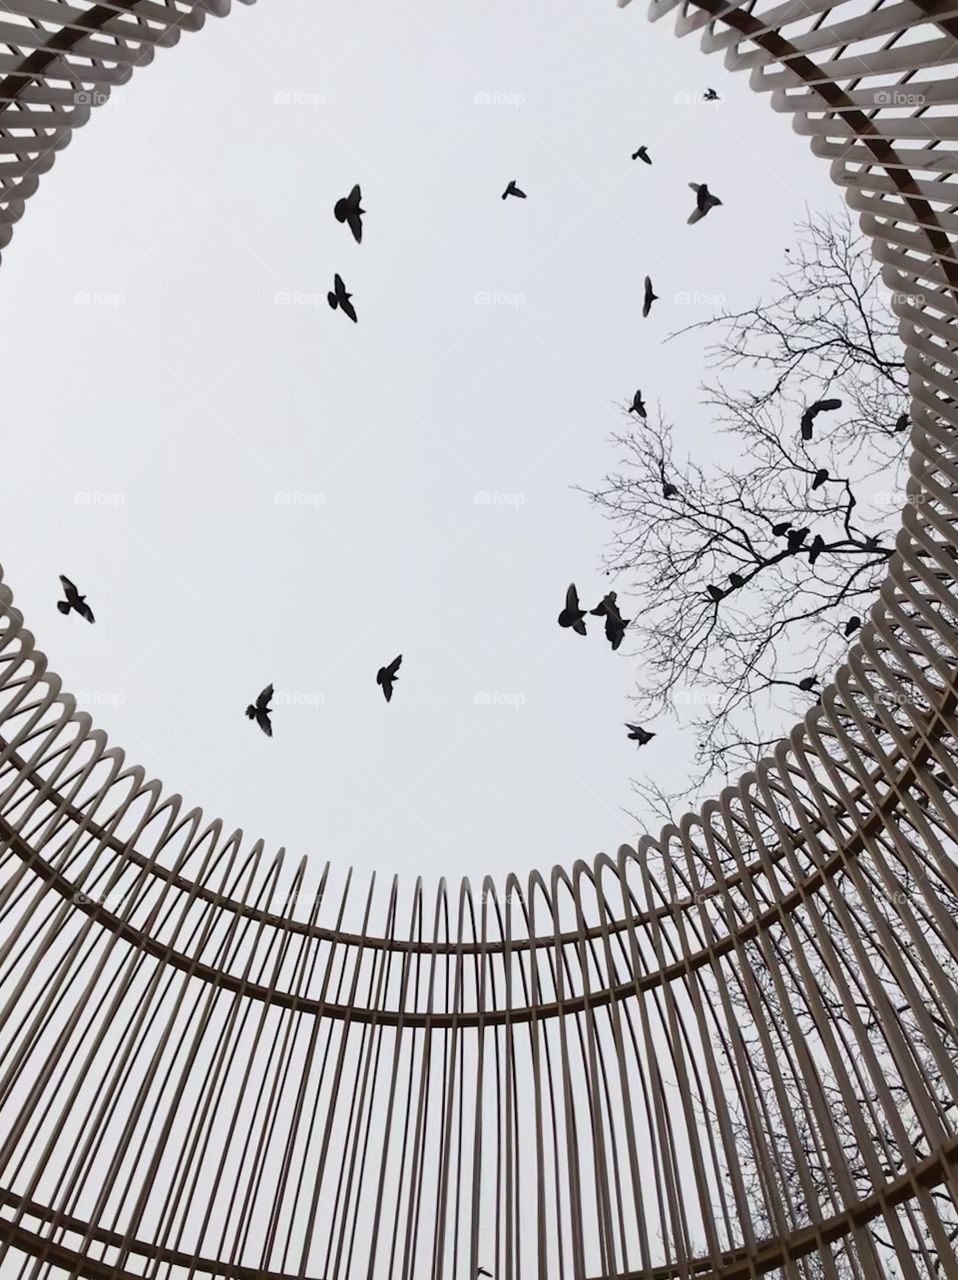 Birda flying above birdcage in Central Park New York City 